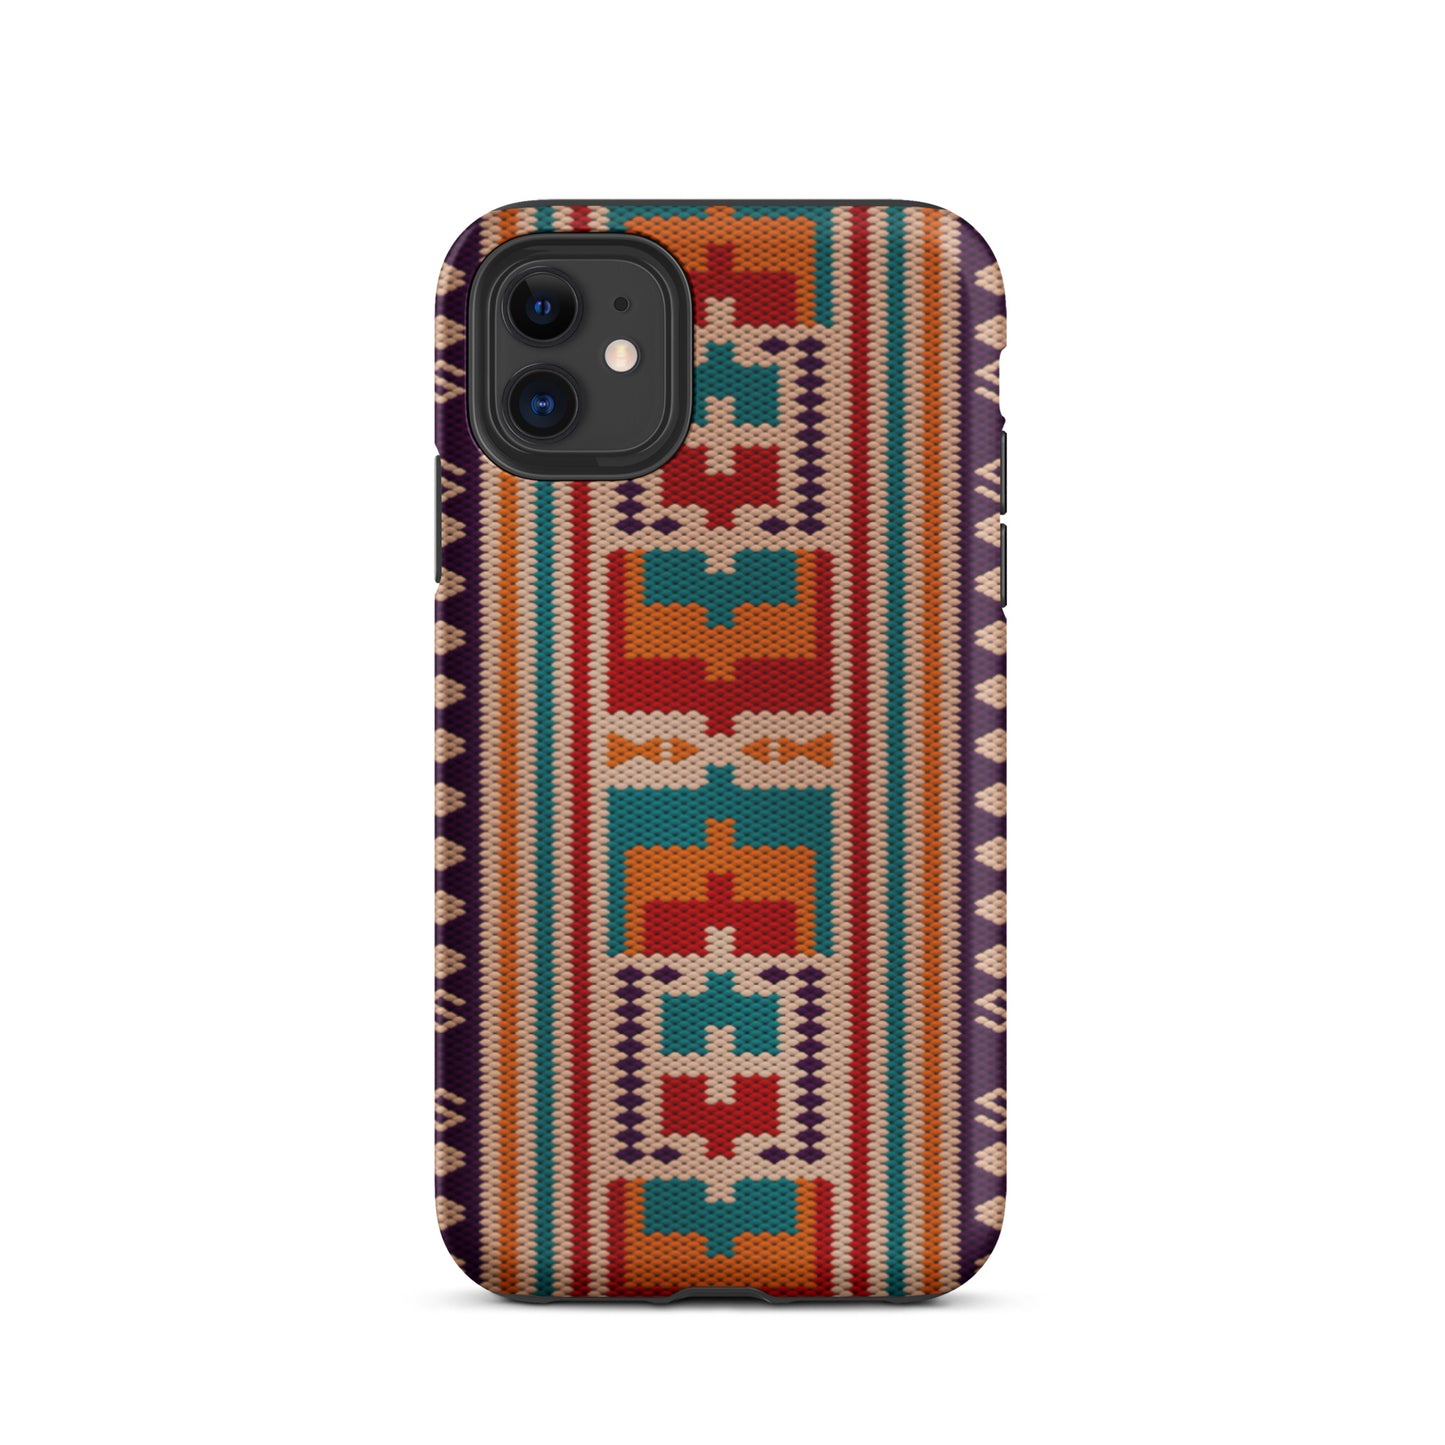 Navajo Tough iPhone 11 case